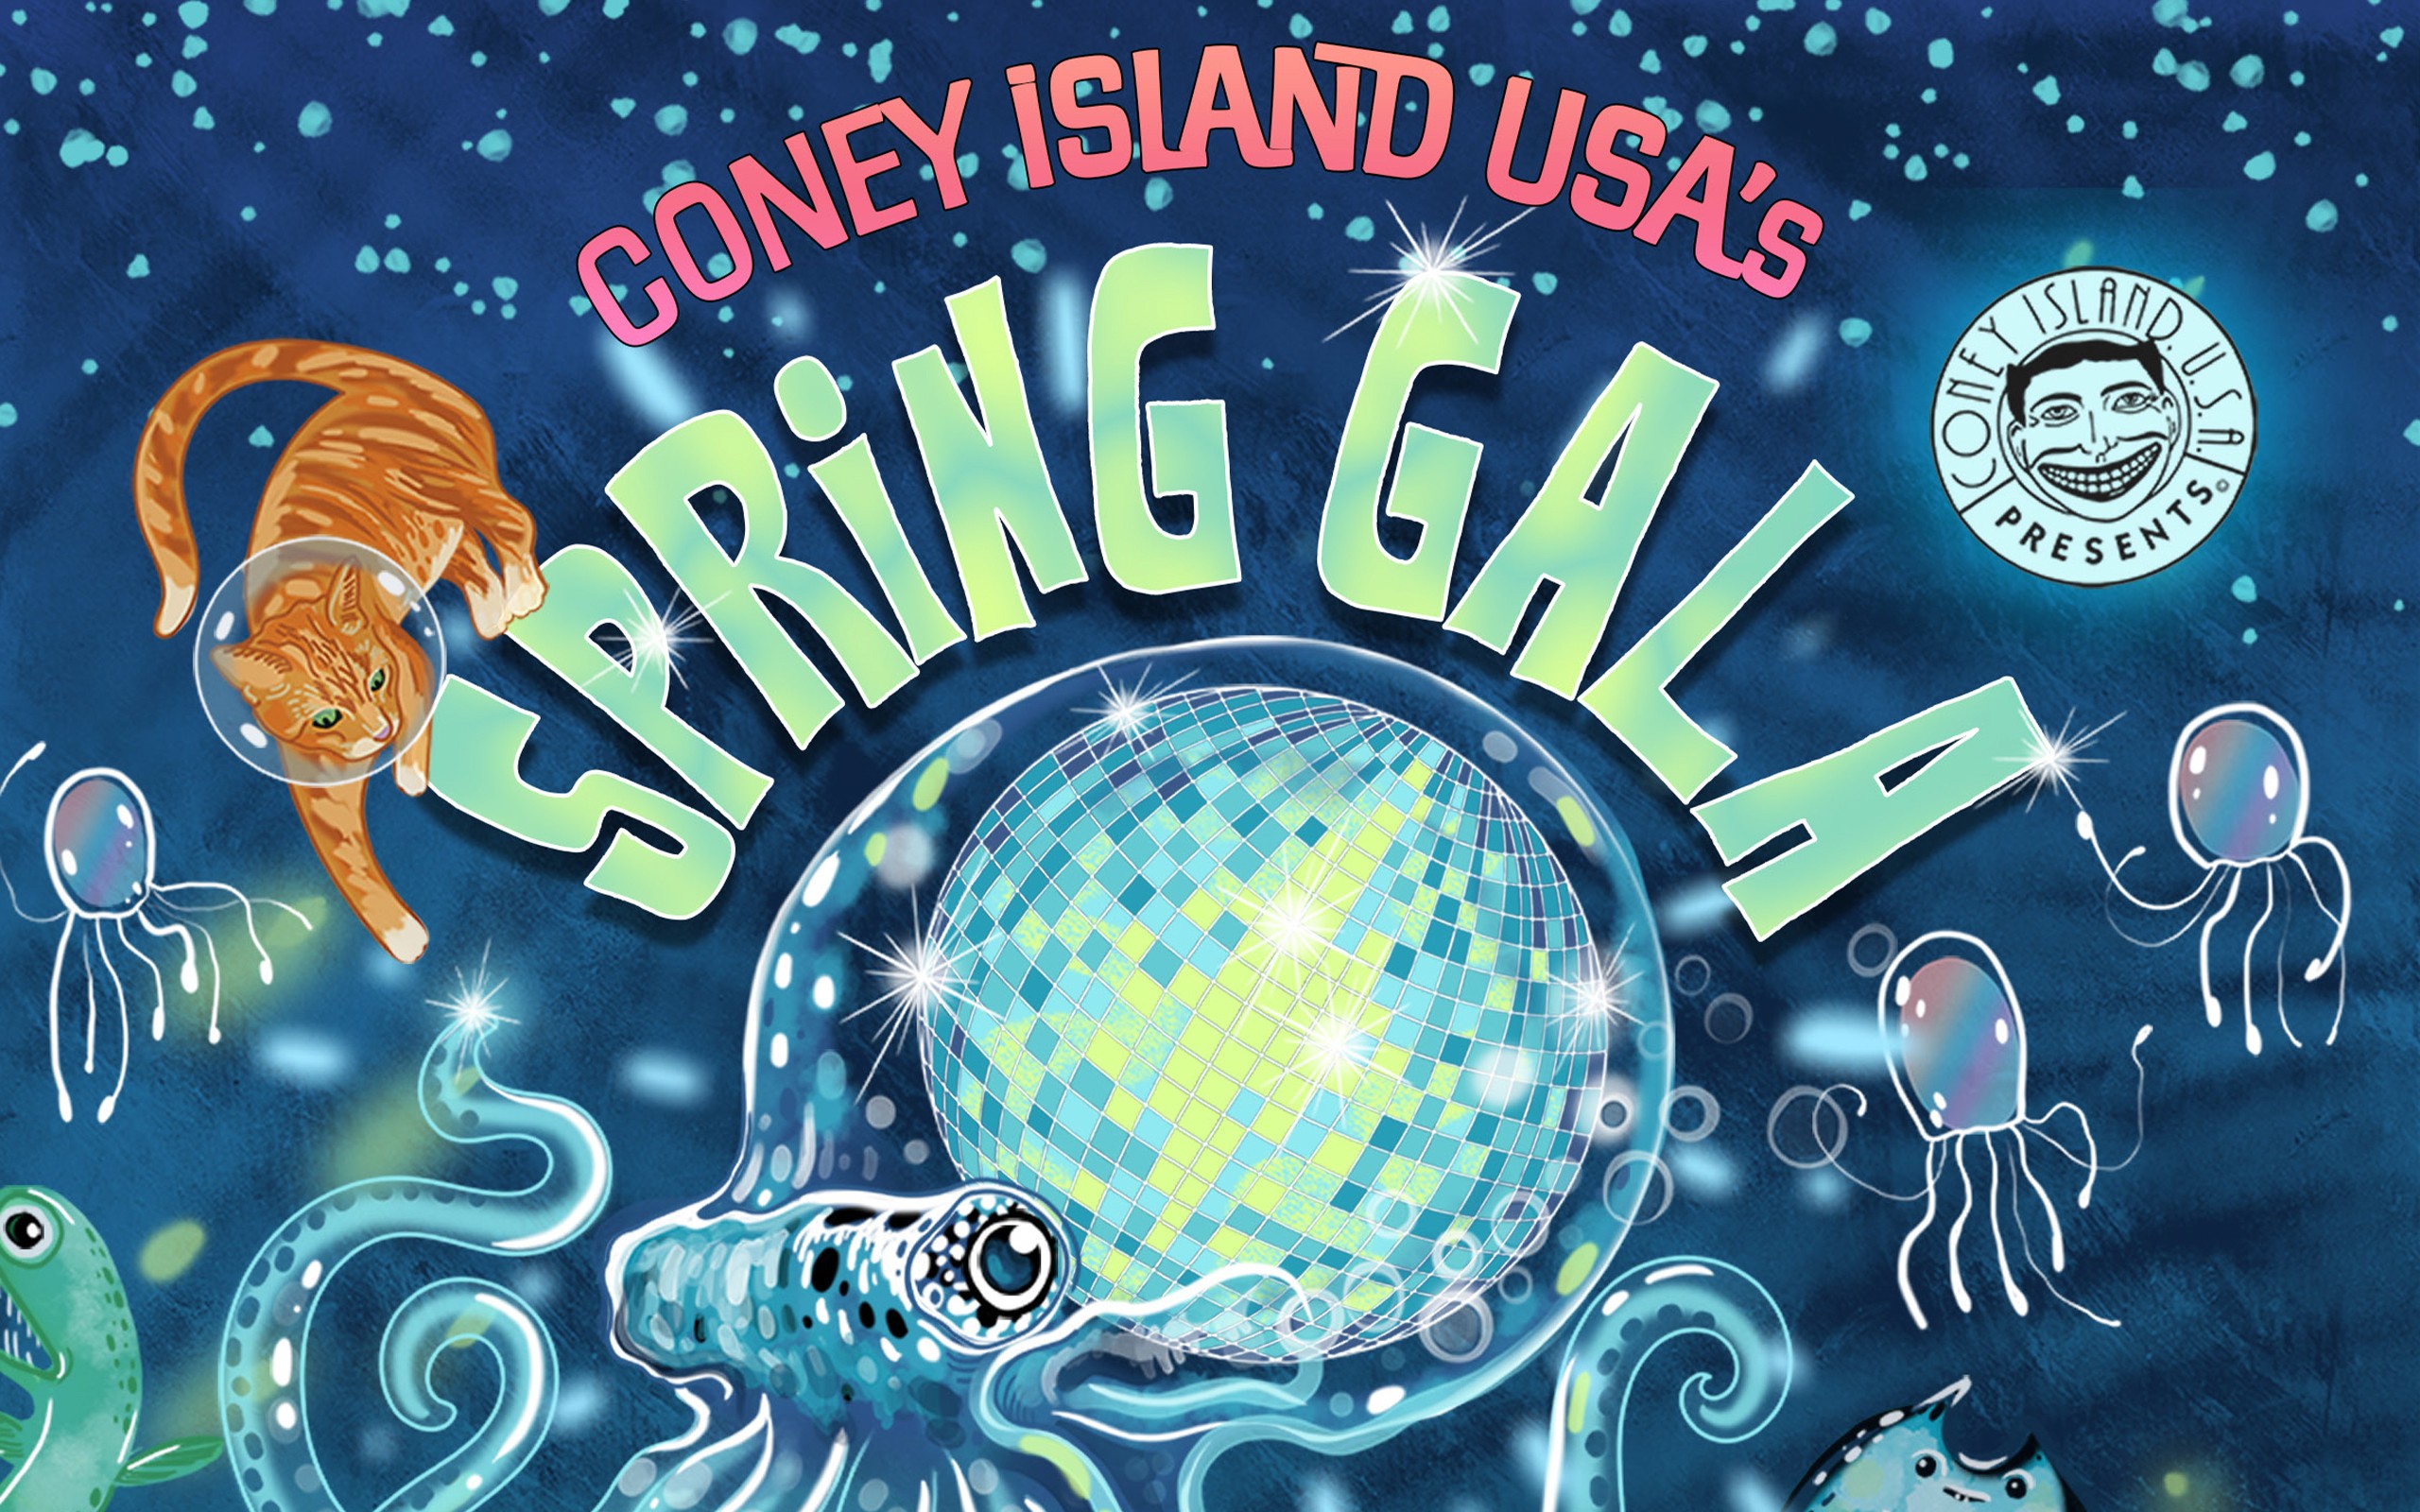 Coney Island USA's Spring Gala